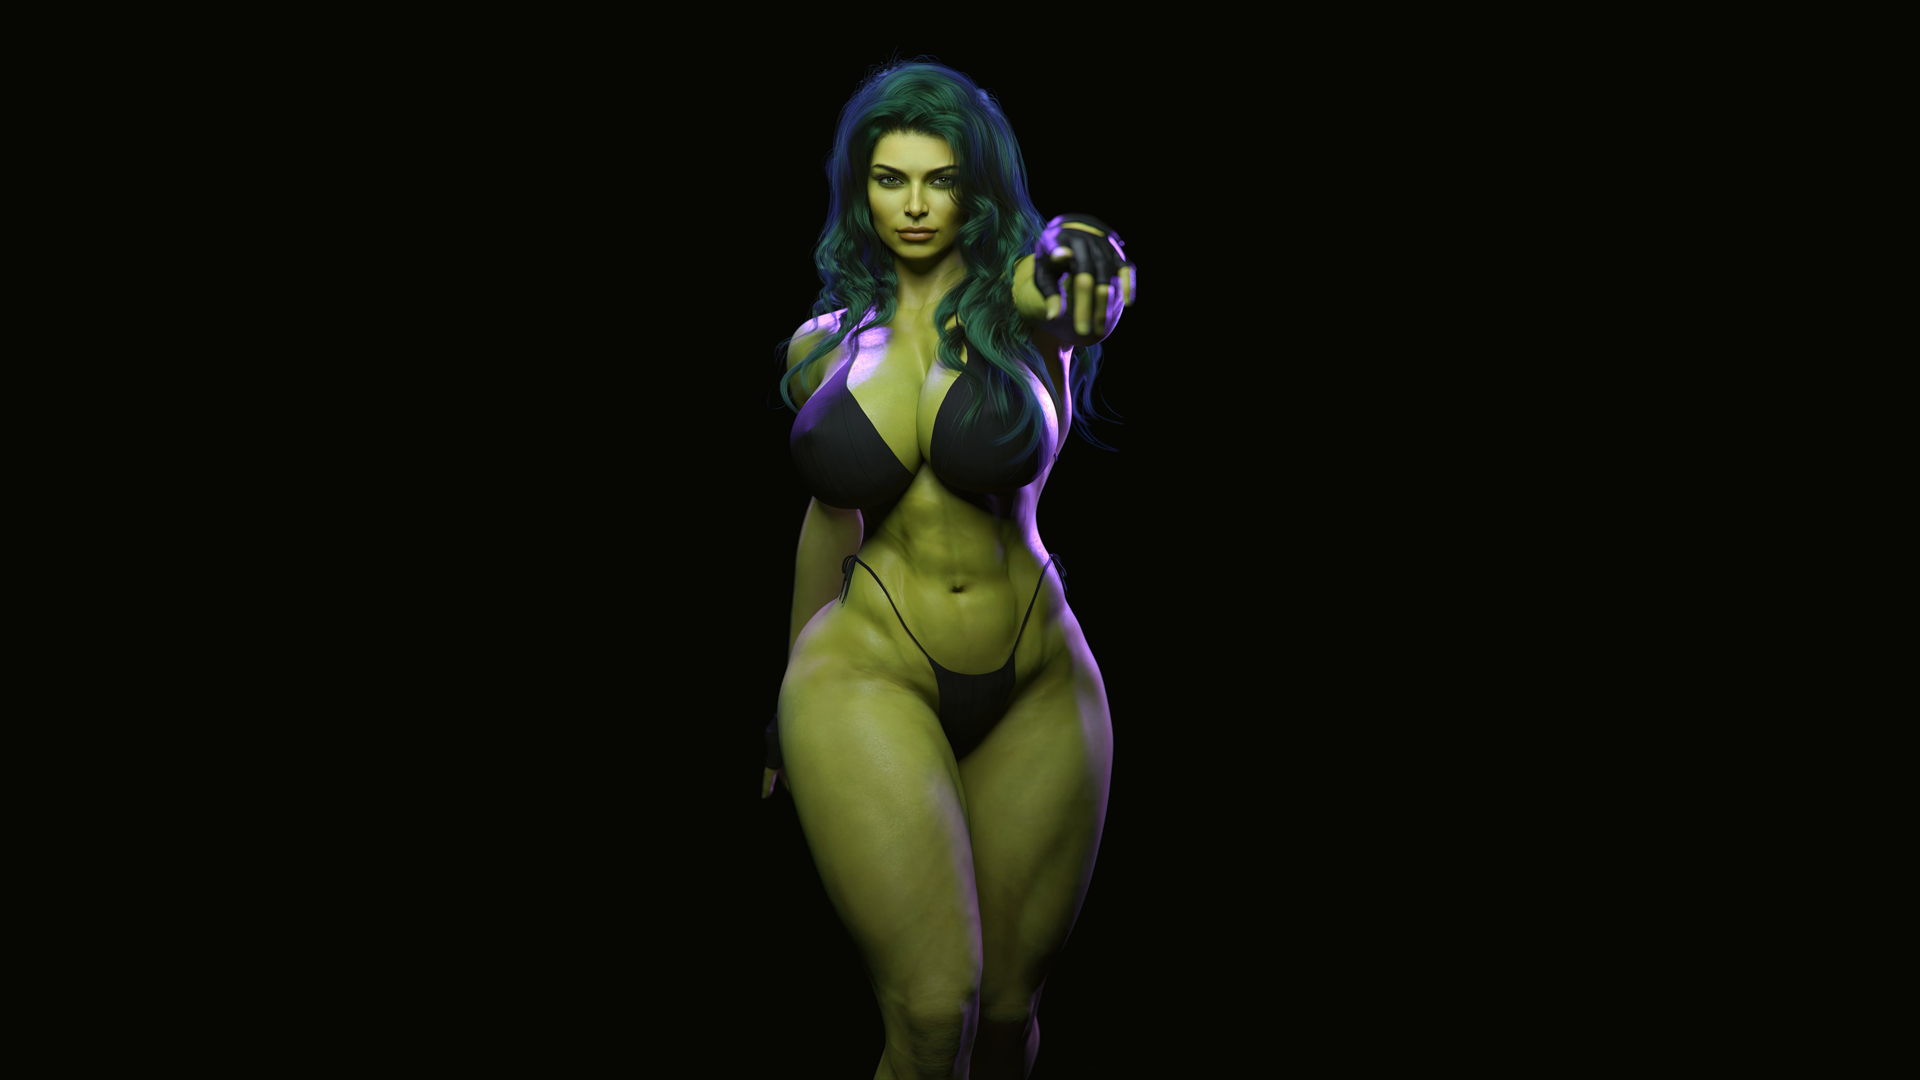 General 1920x1080 SMC-69 She-Hulk athletic female minimalism simple background bikini cleavage big boobs black background Marvel Comics CGI looking at viewer women superheroines belly curvy green skin finger pointing thighs